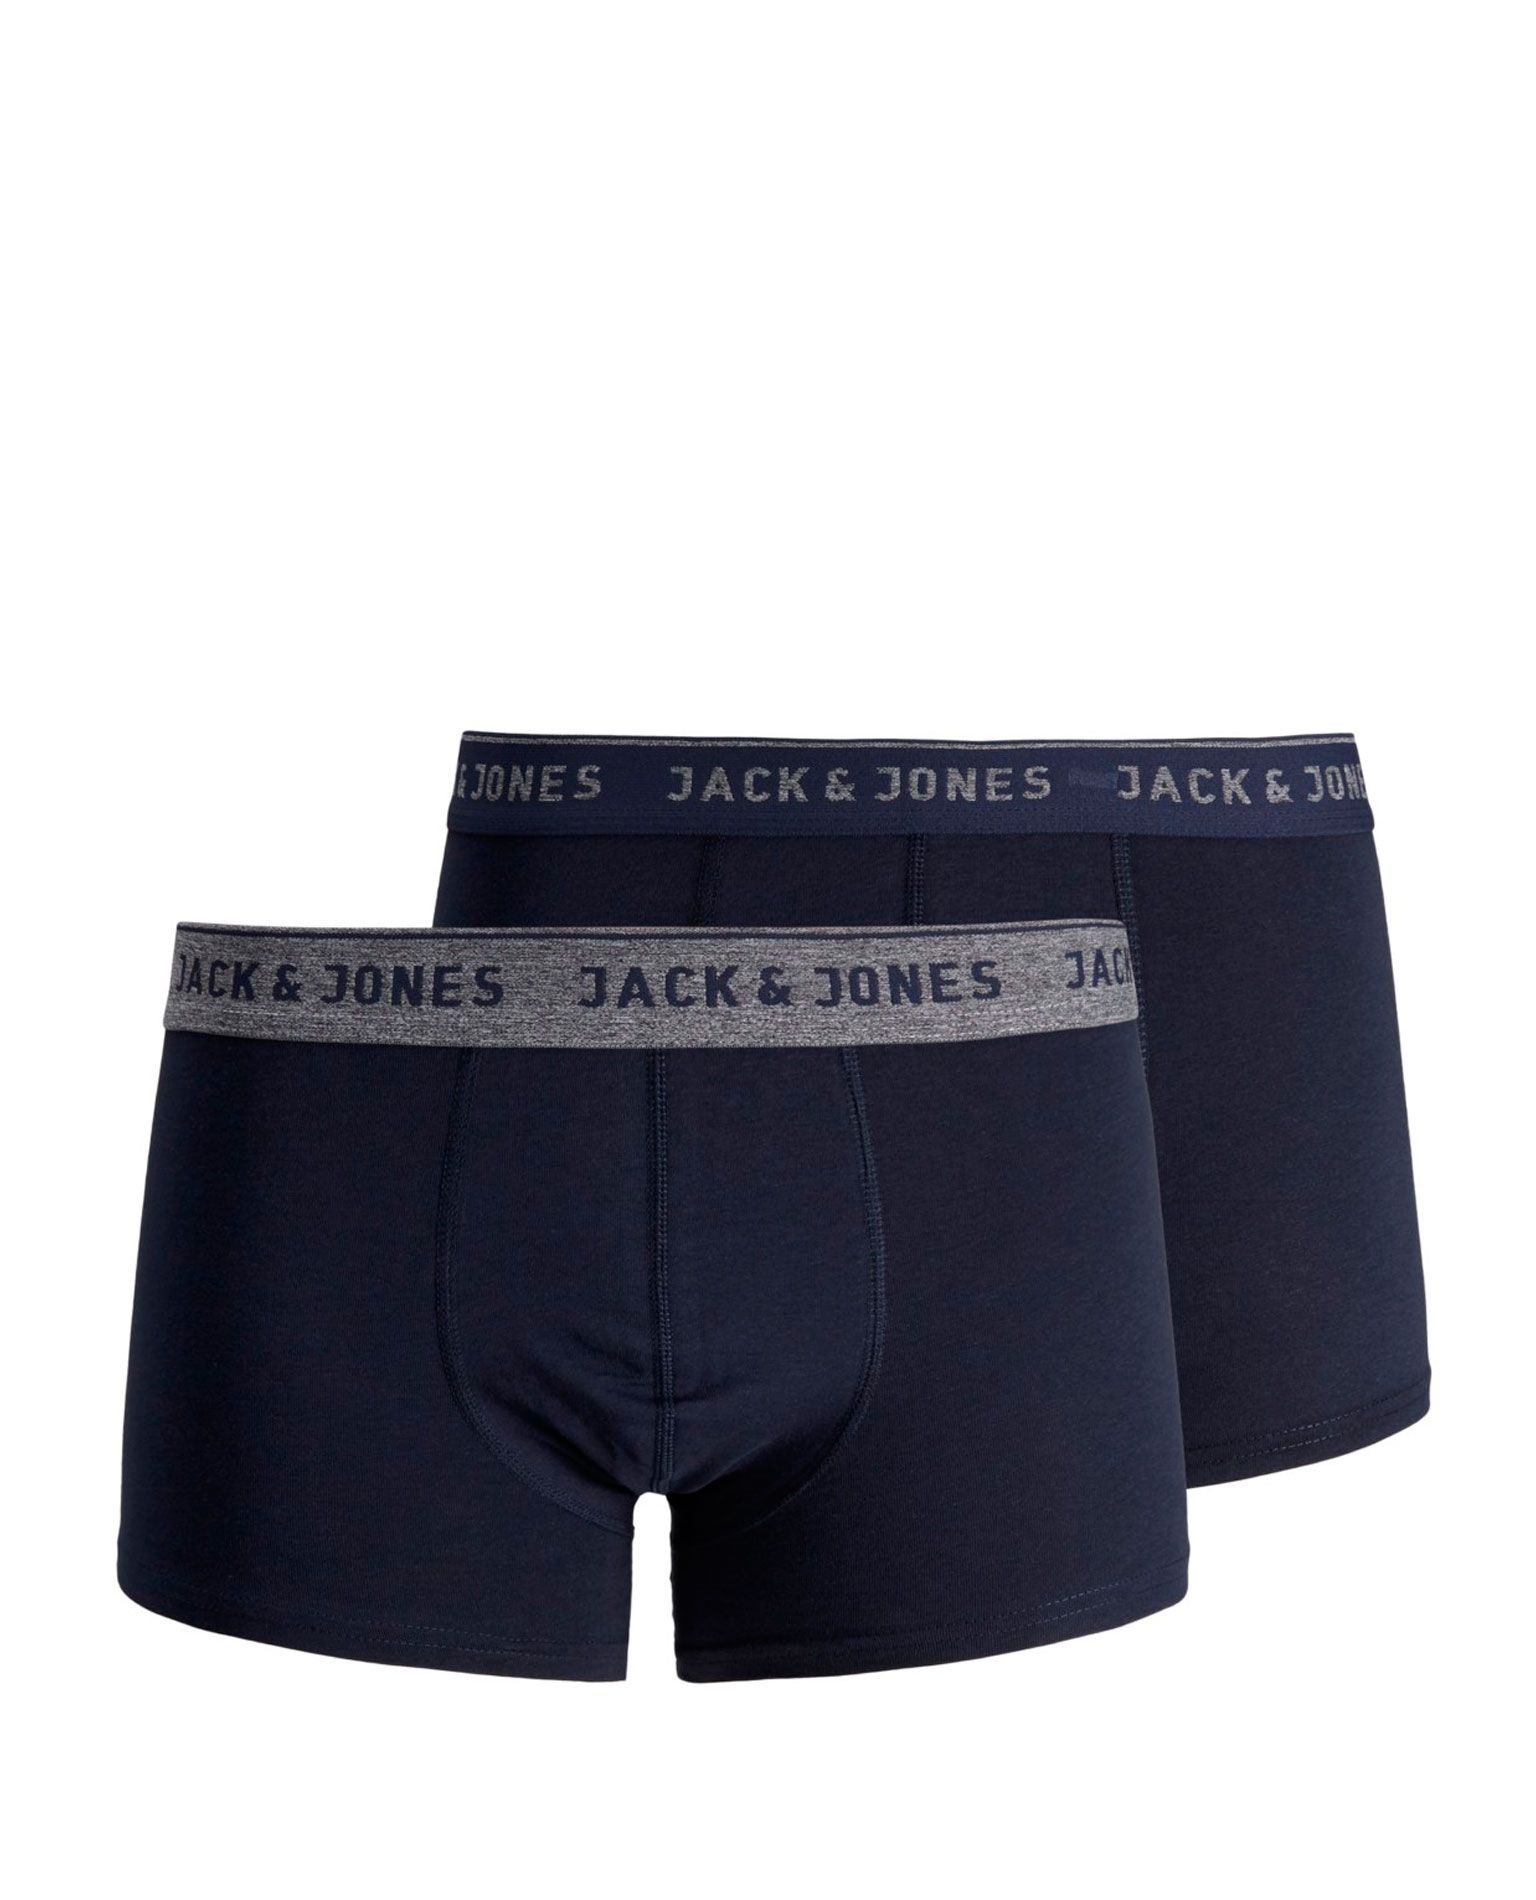 Vincent 2Pack Underwear Jack & Jones - 8238 - Trashbin - Jerone.com